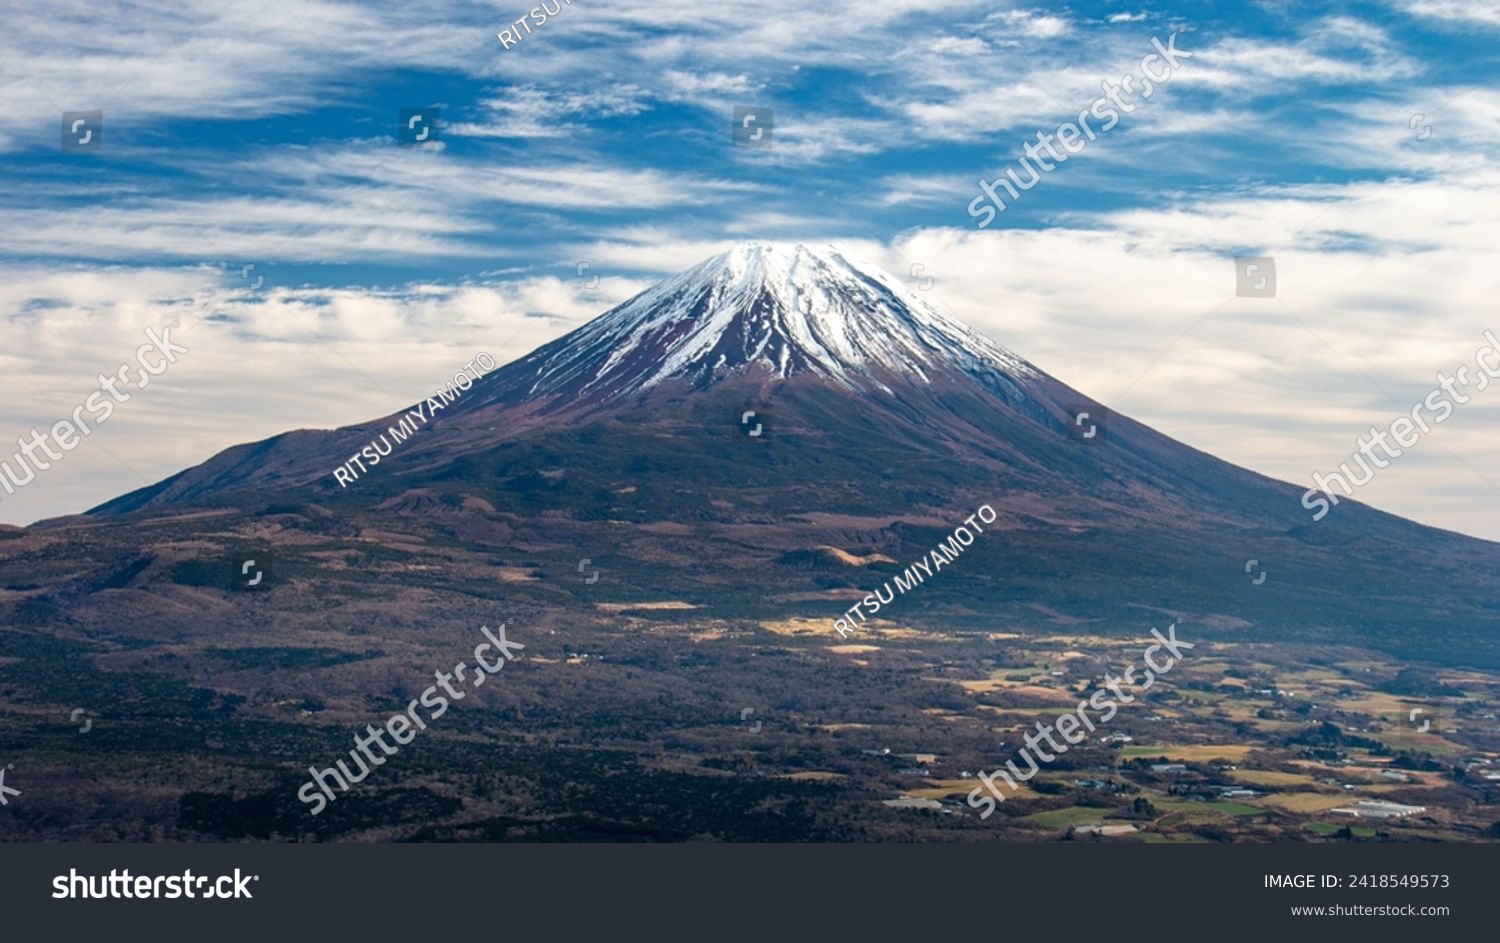 Spectacular view of Mt.Fuji from Mt.Ryugatake, Yamanashi 100 Famous Mountains, Yamanashi Prefecture, Japan, #2418549573